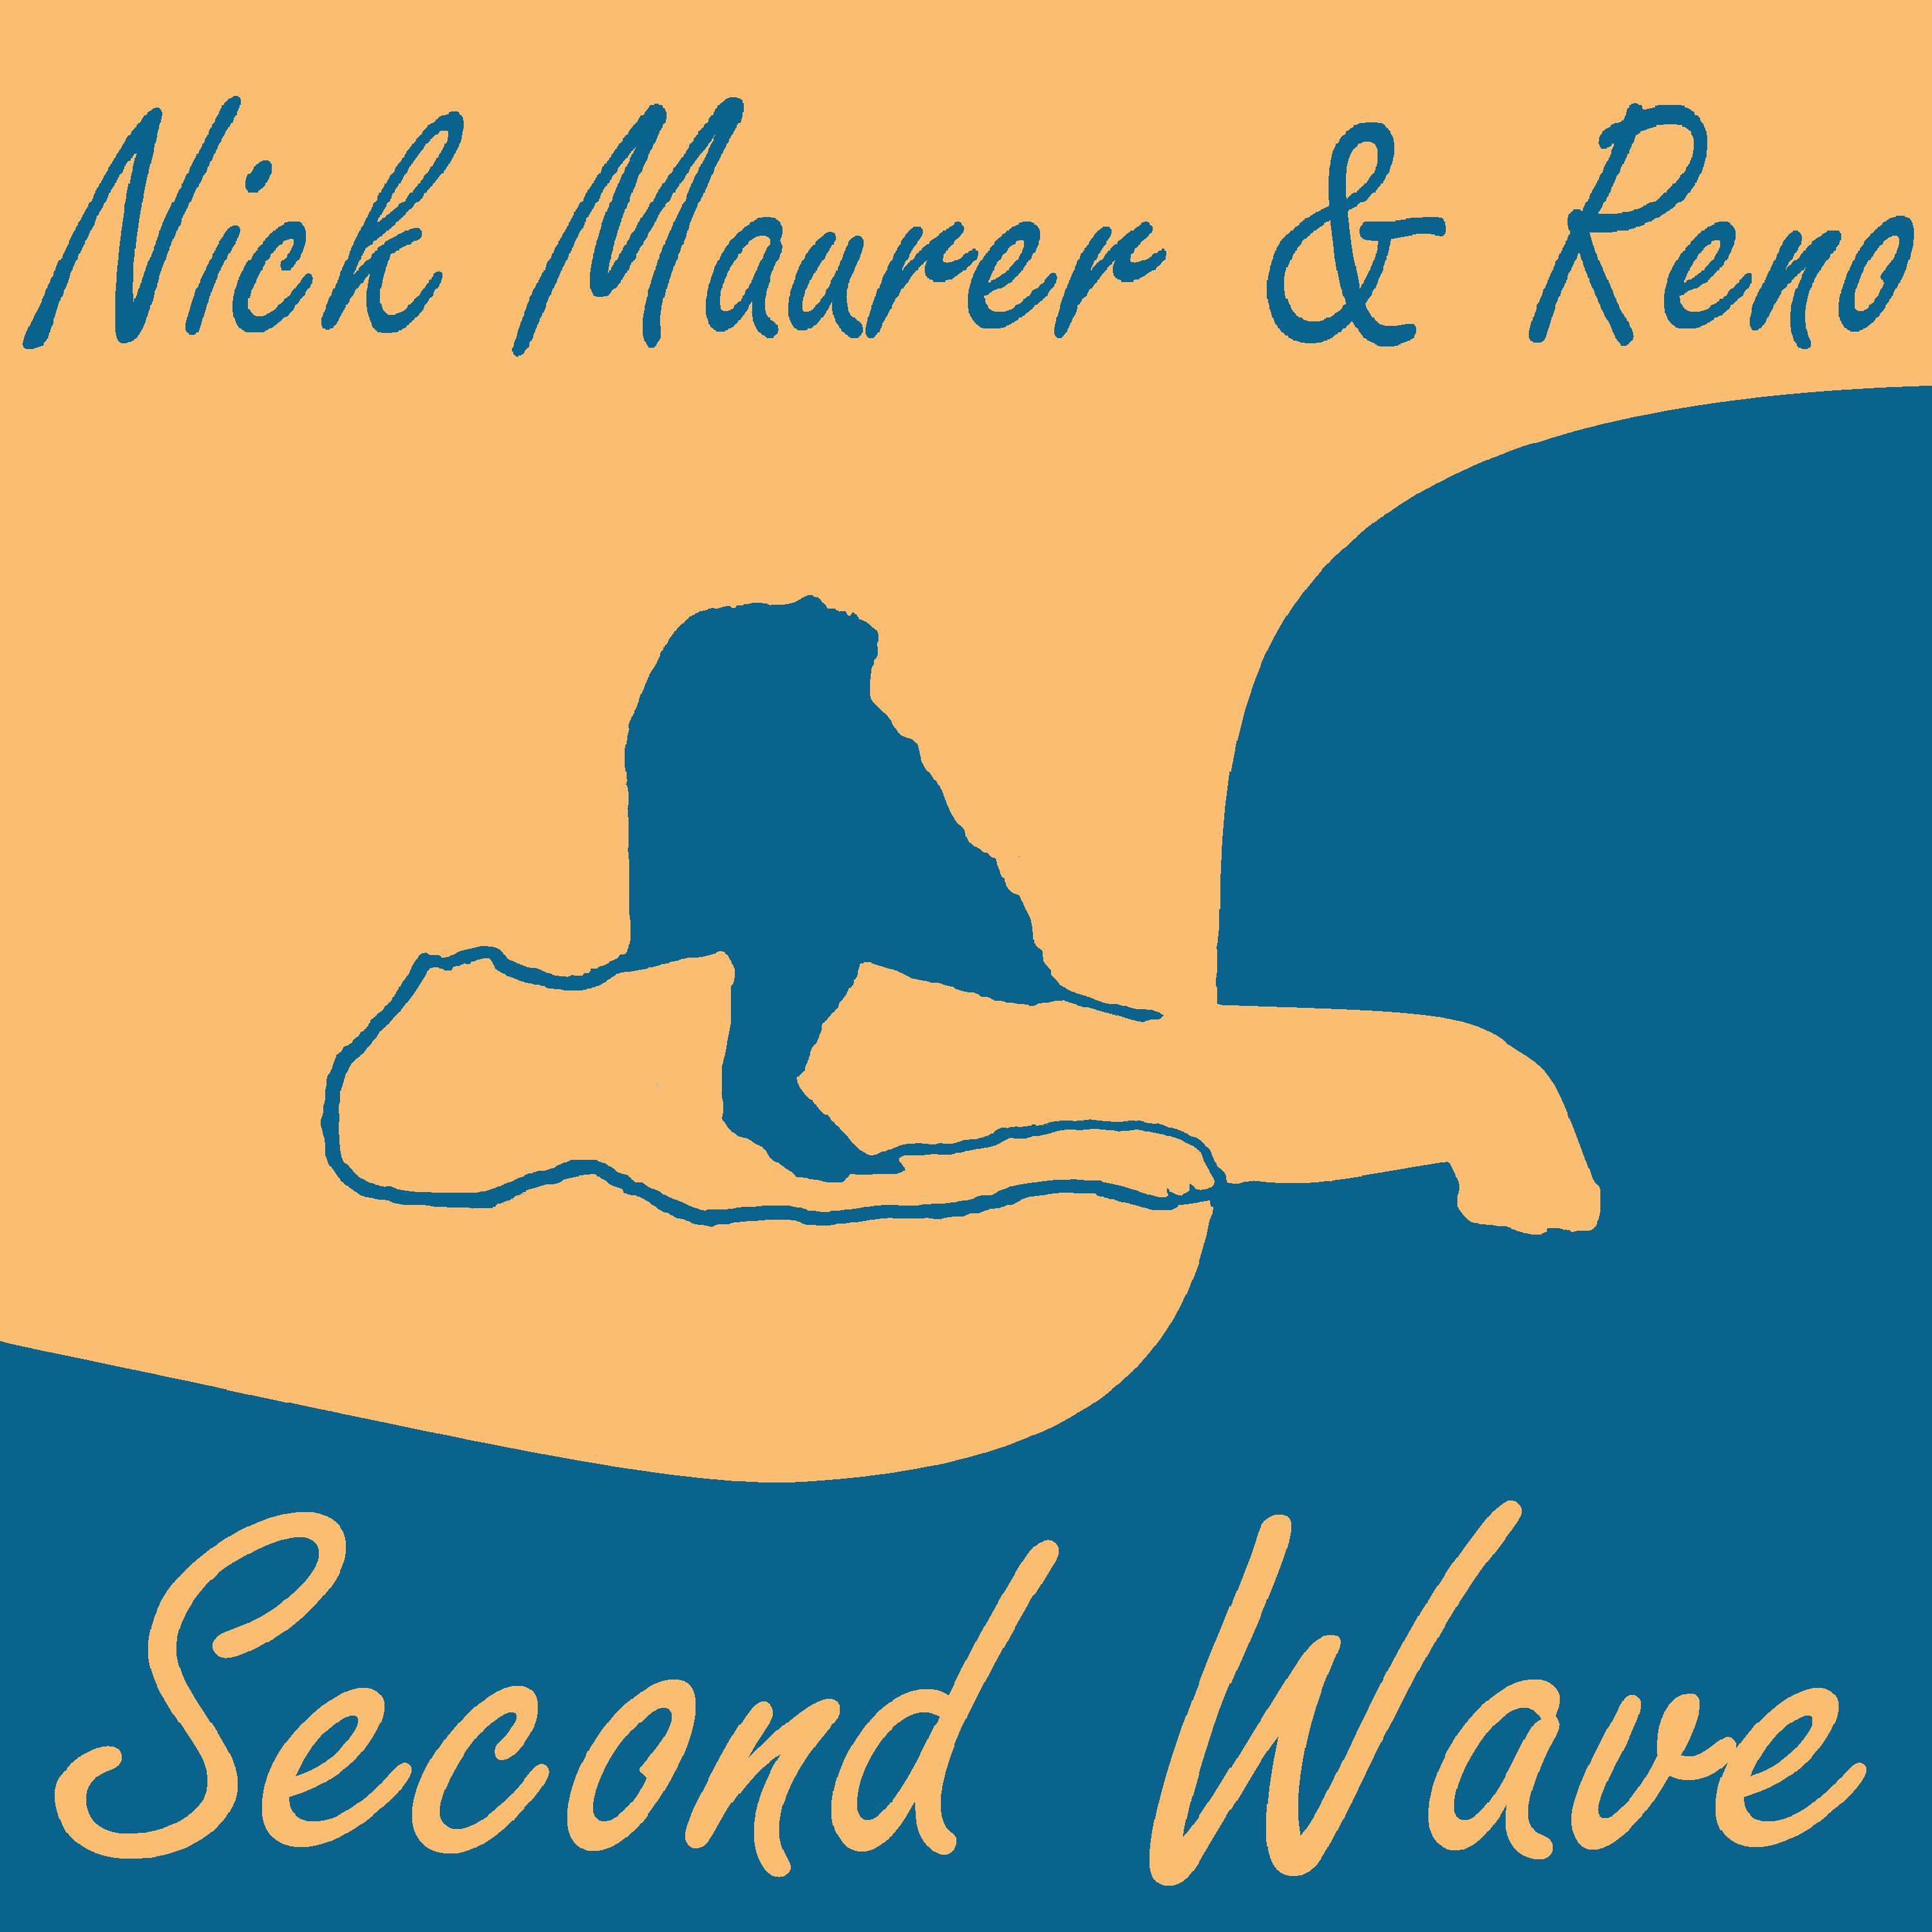 Reno - Second Wave (feat. Nick Maurer)